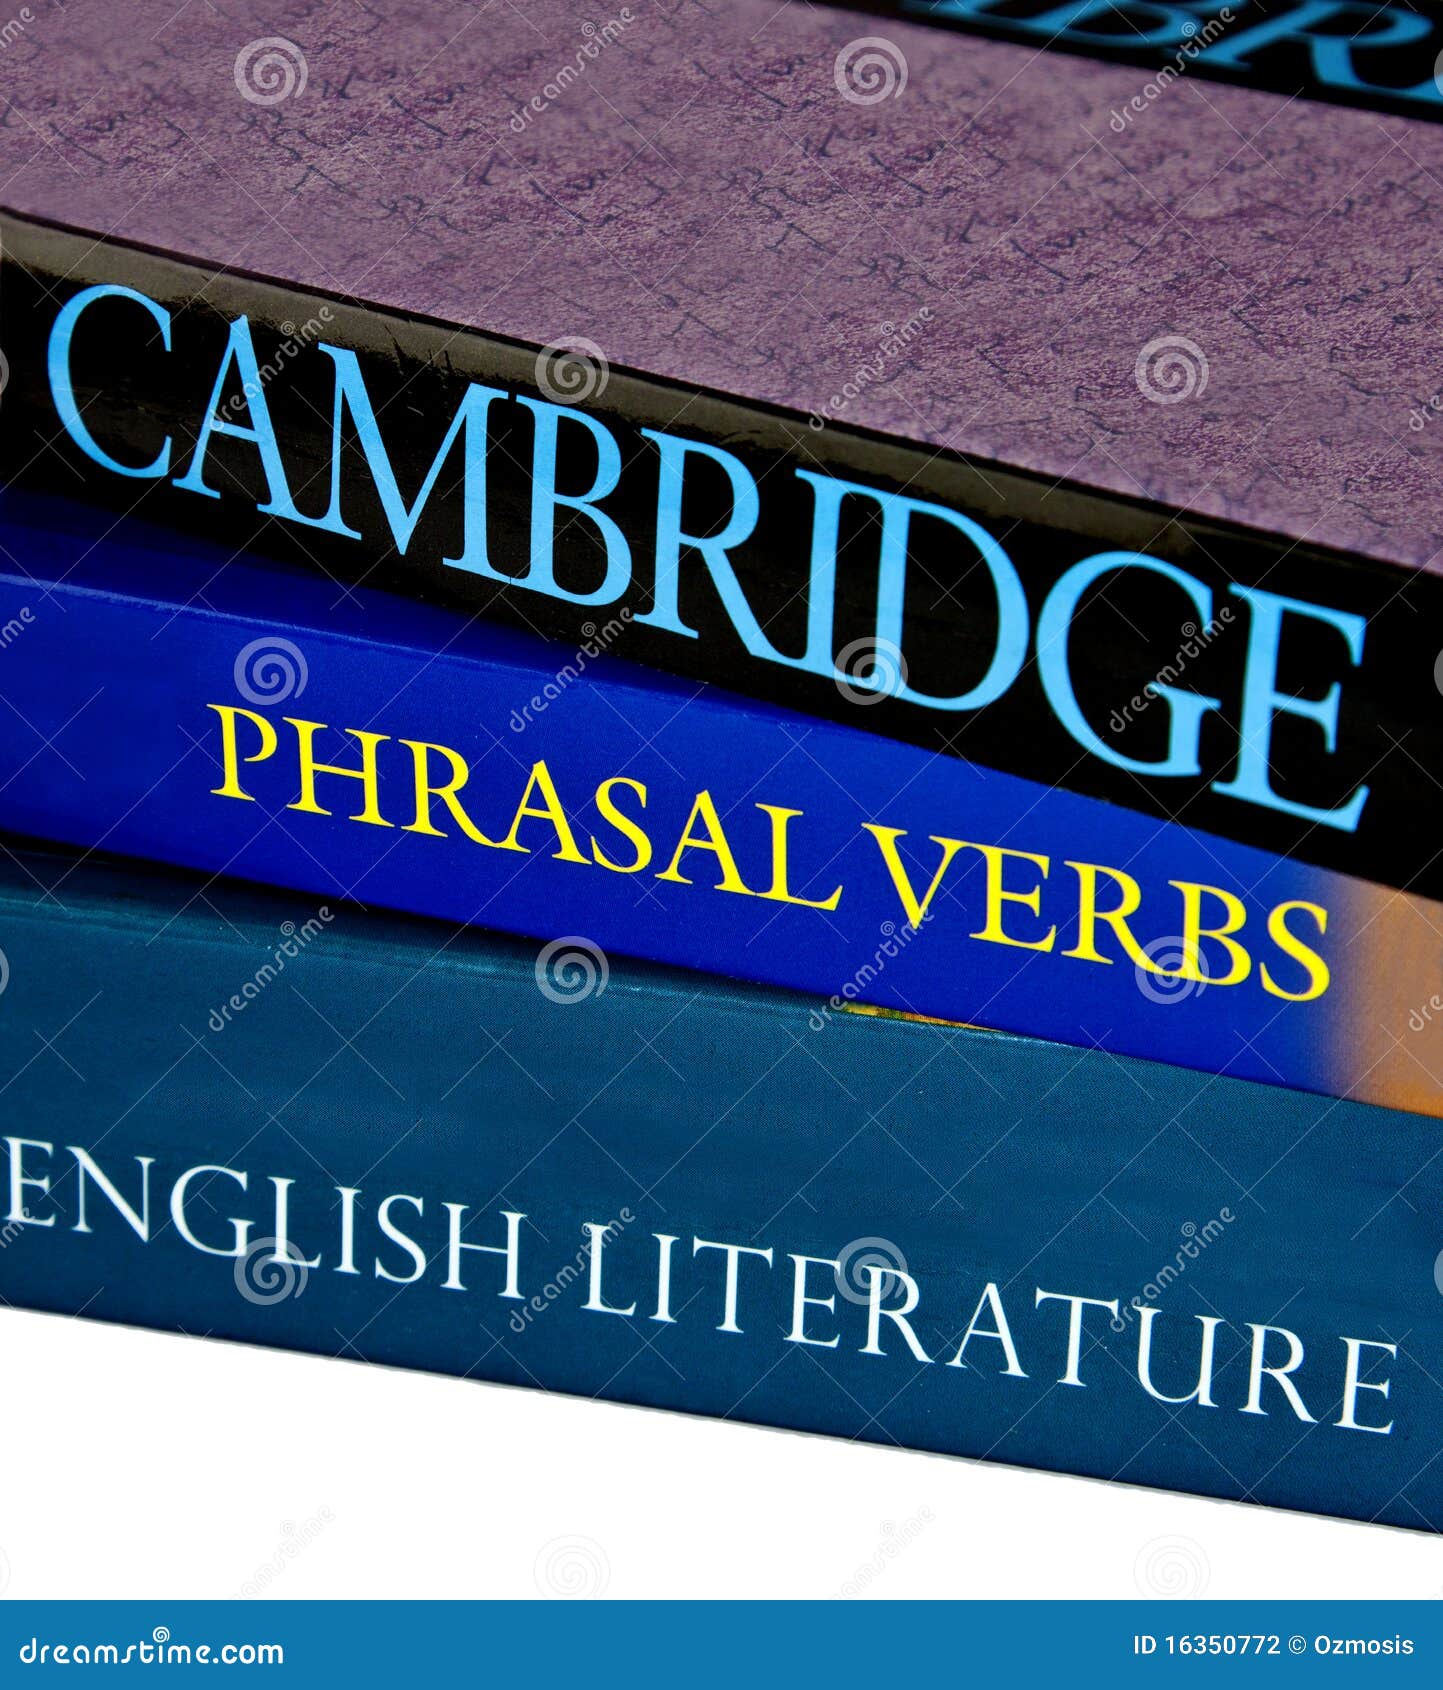 english and phrasal verbs